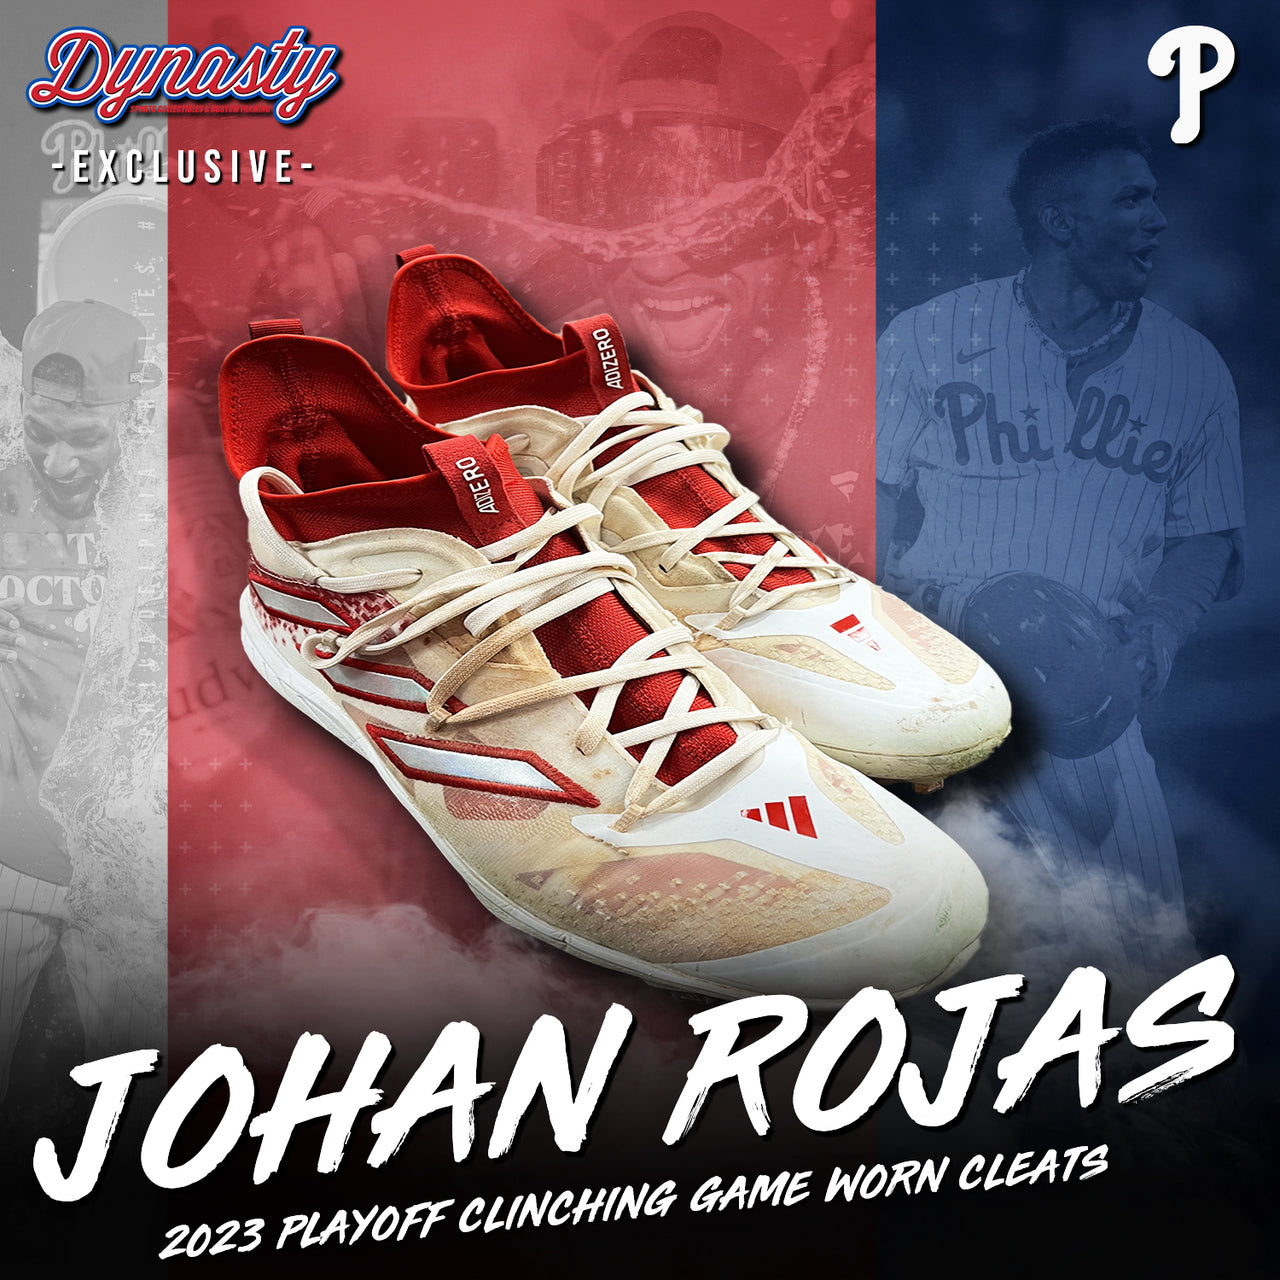 Johan Rojas Game-Worn Cleats From Phillies Postseason Clinching Game